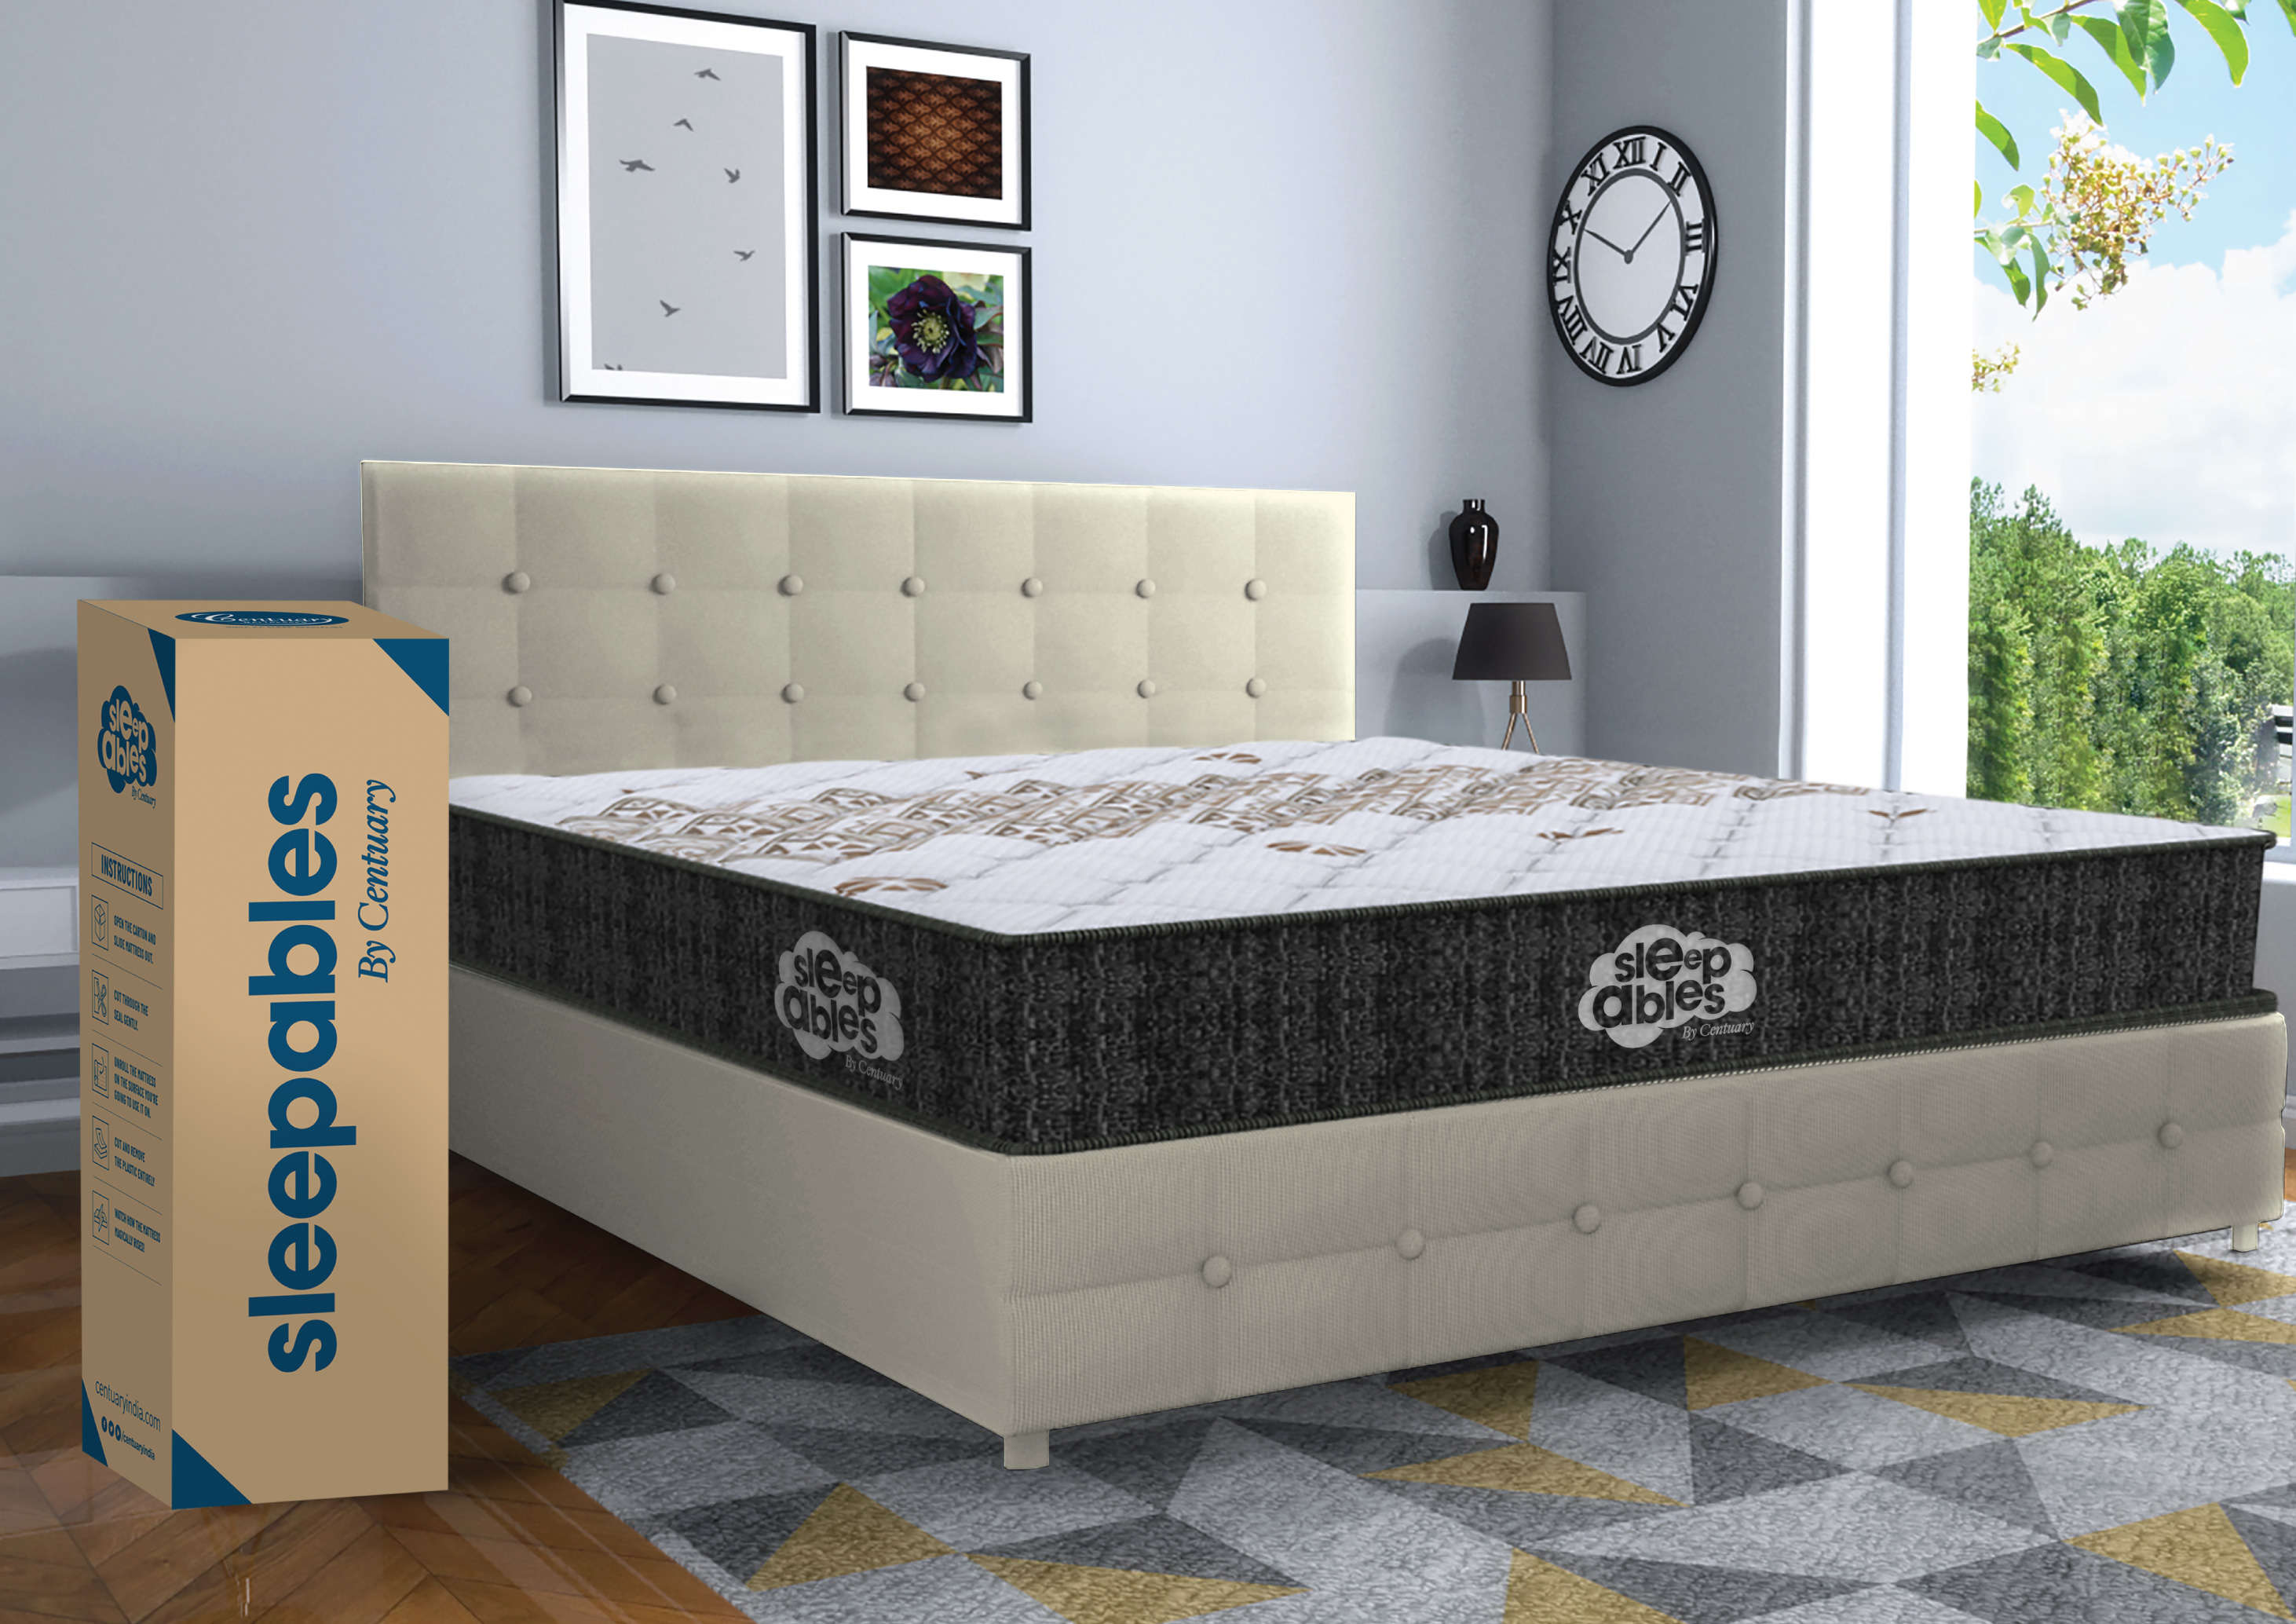 centuary mattress price in chennai